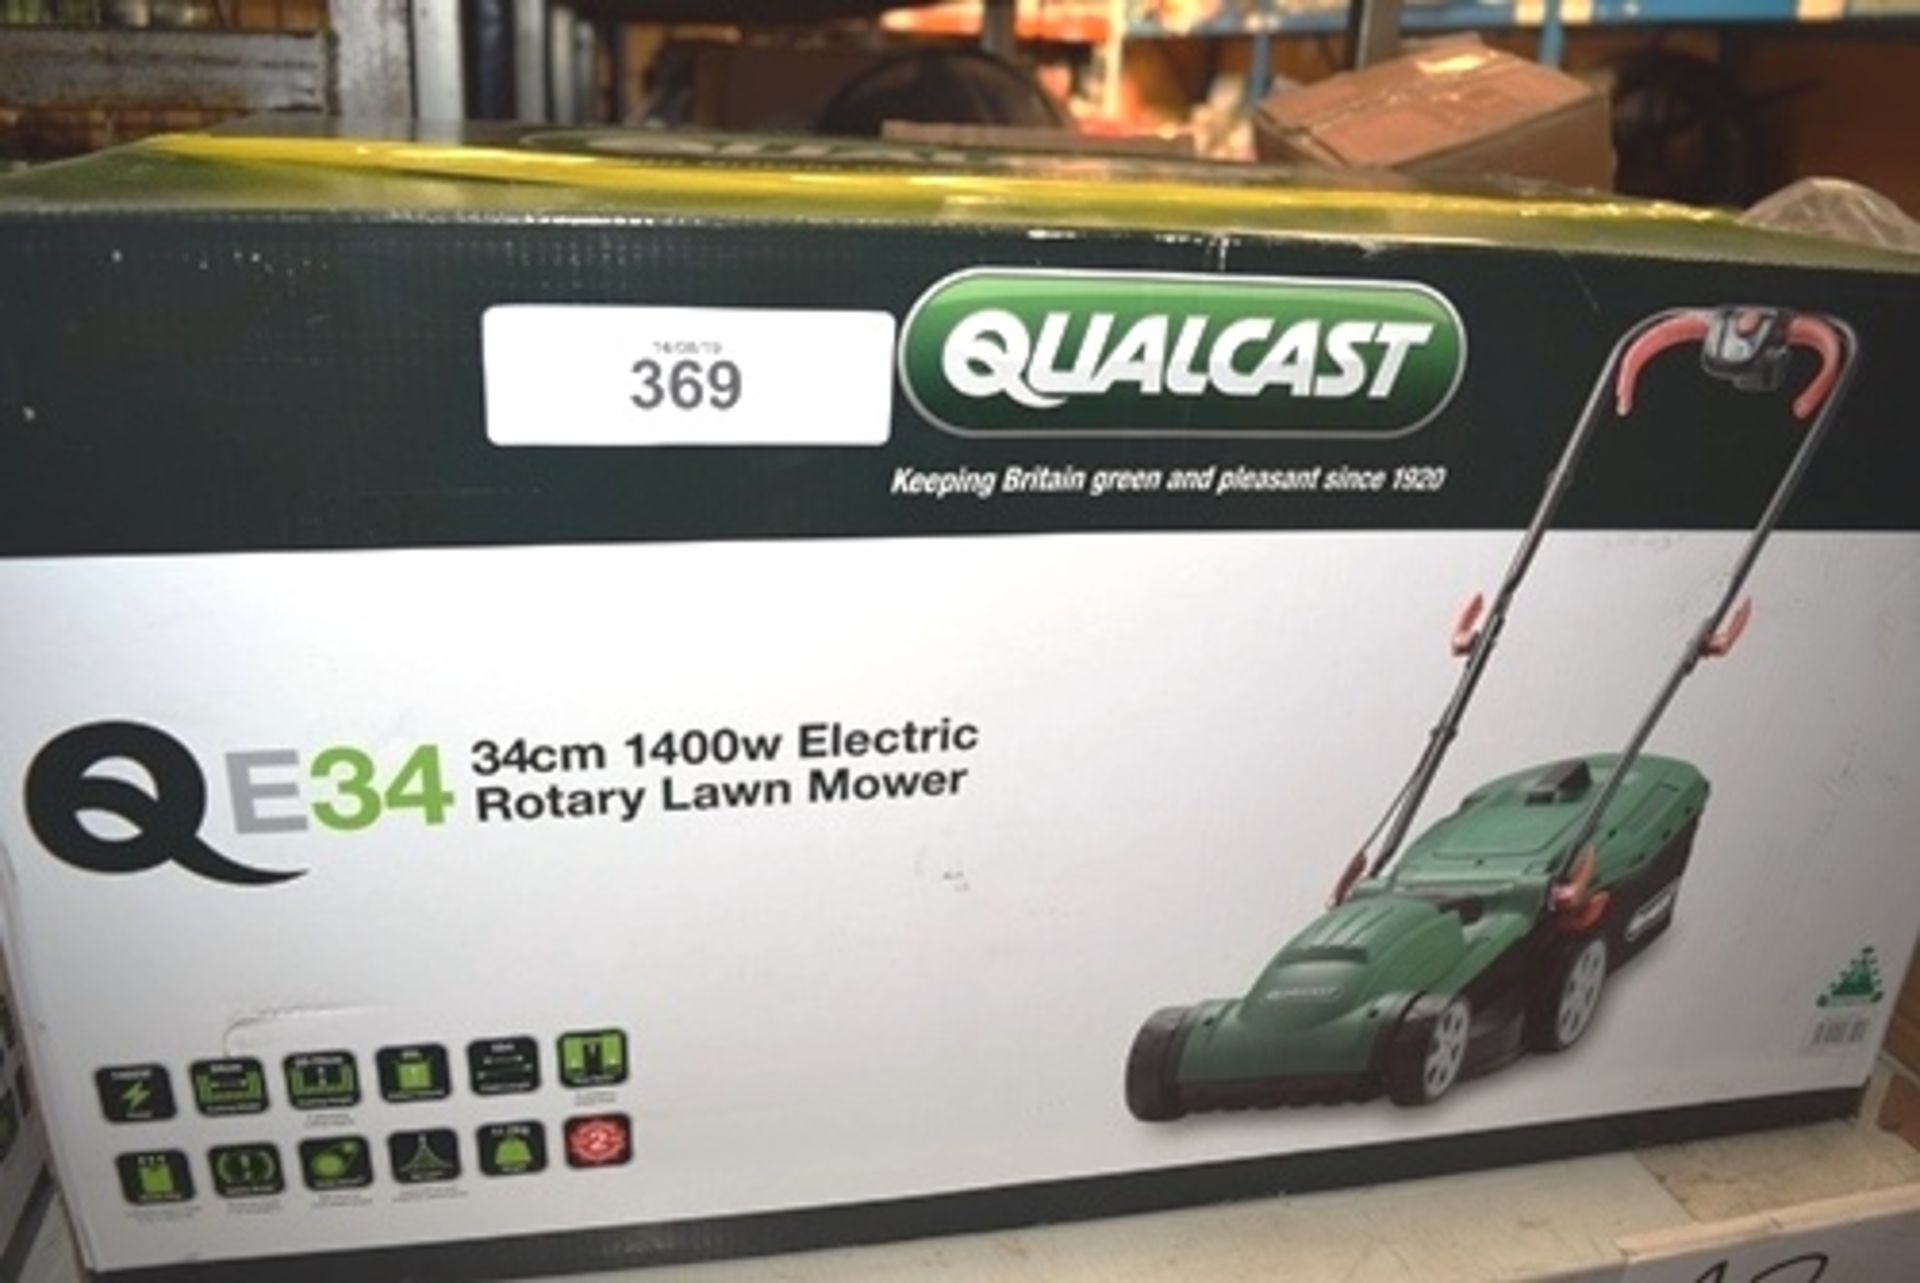 1 x Qualcast QE34 34cm, 1400W electric rotary lawnmower - New in box (es12)